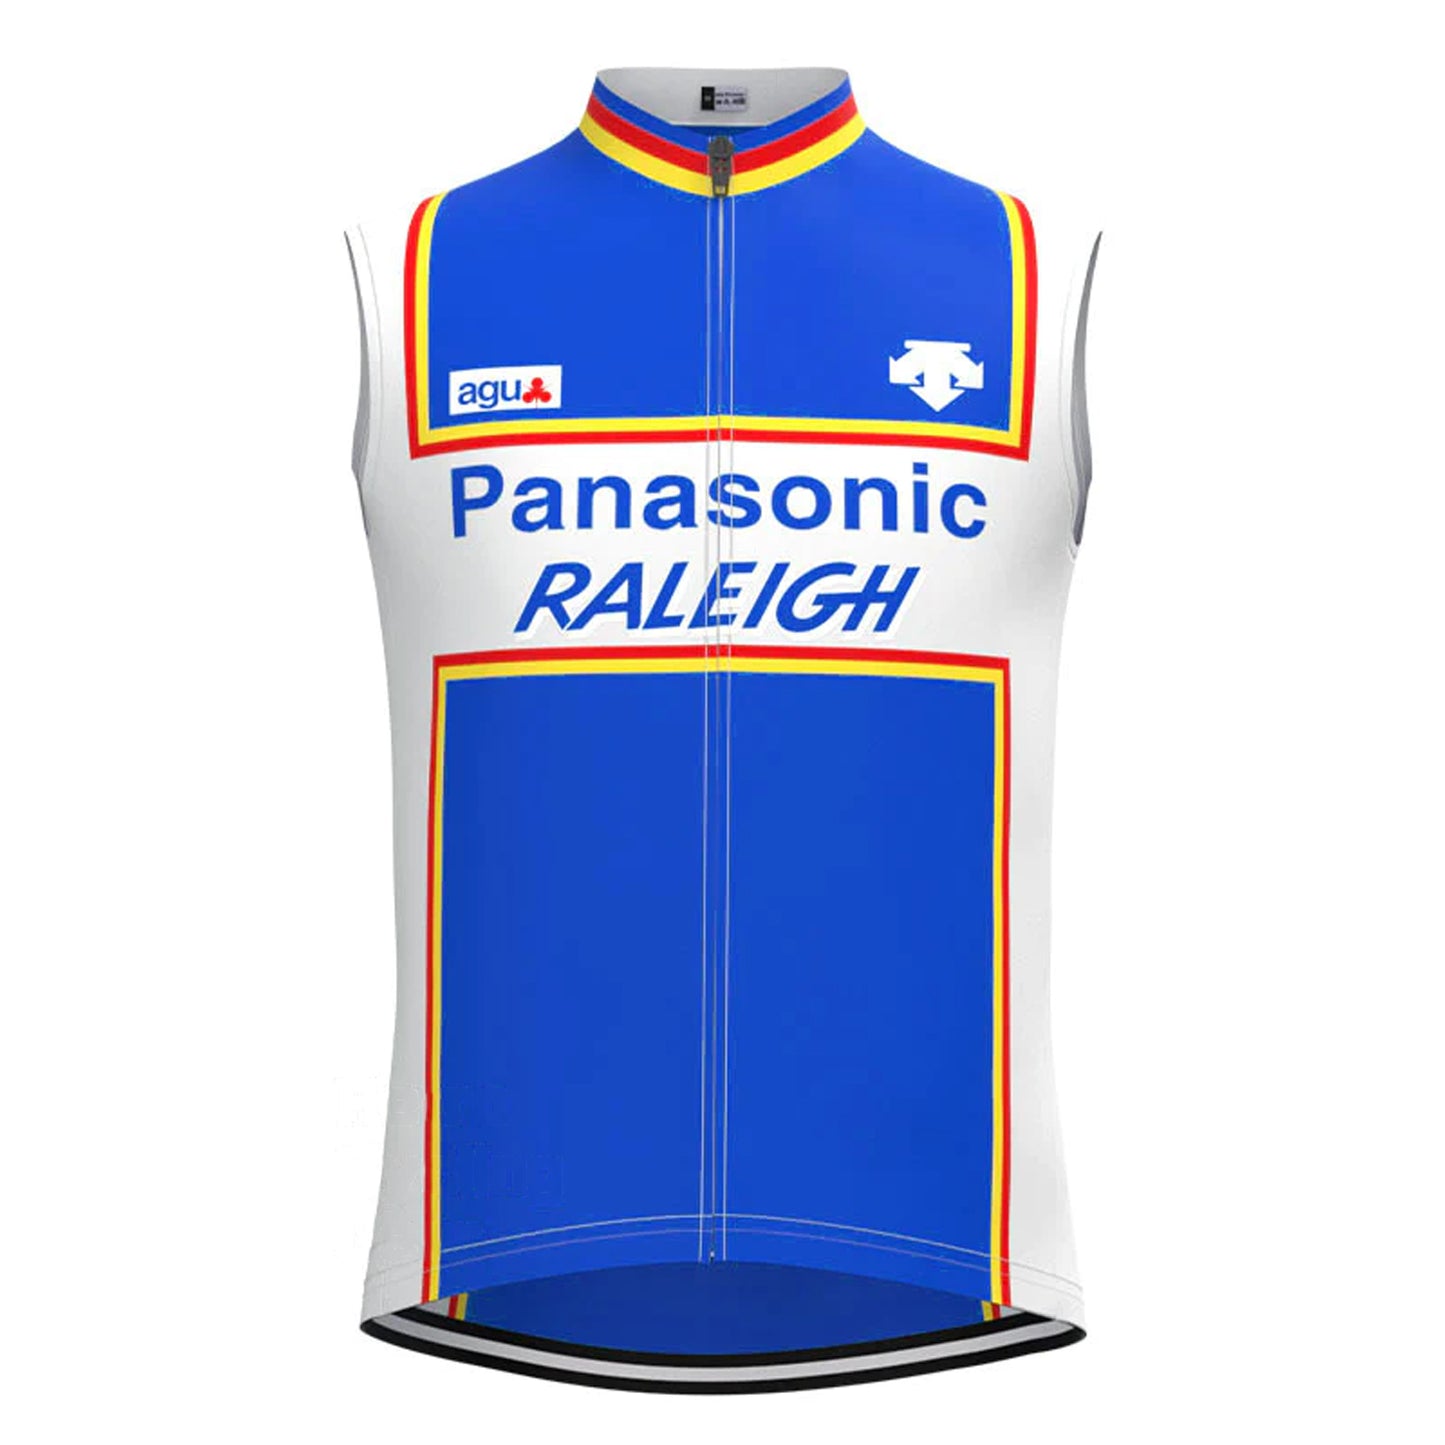 Panasonic Raleigh Blue Retro MTB Cycling Vest